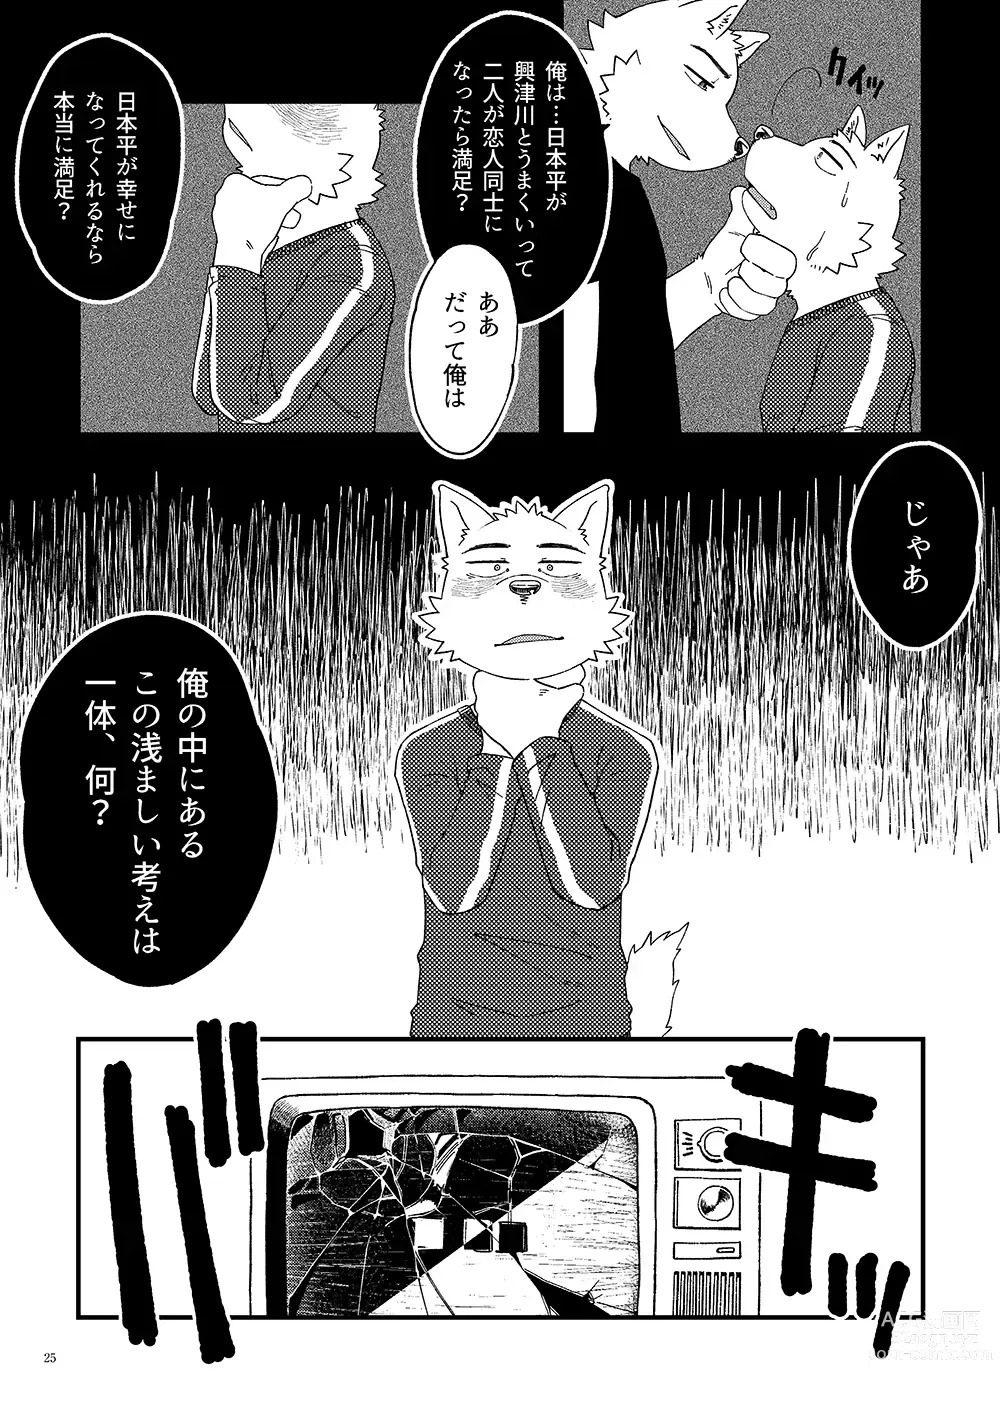 Page 26 of doujinshi Sanbunnoichi Vol 2: Datte sukidakara.